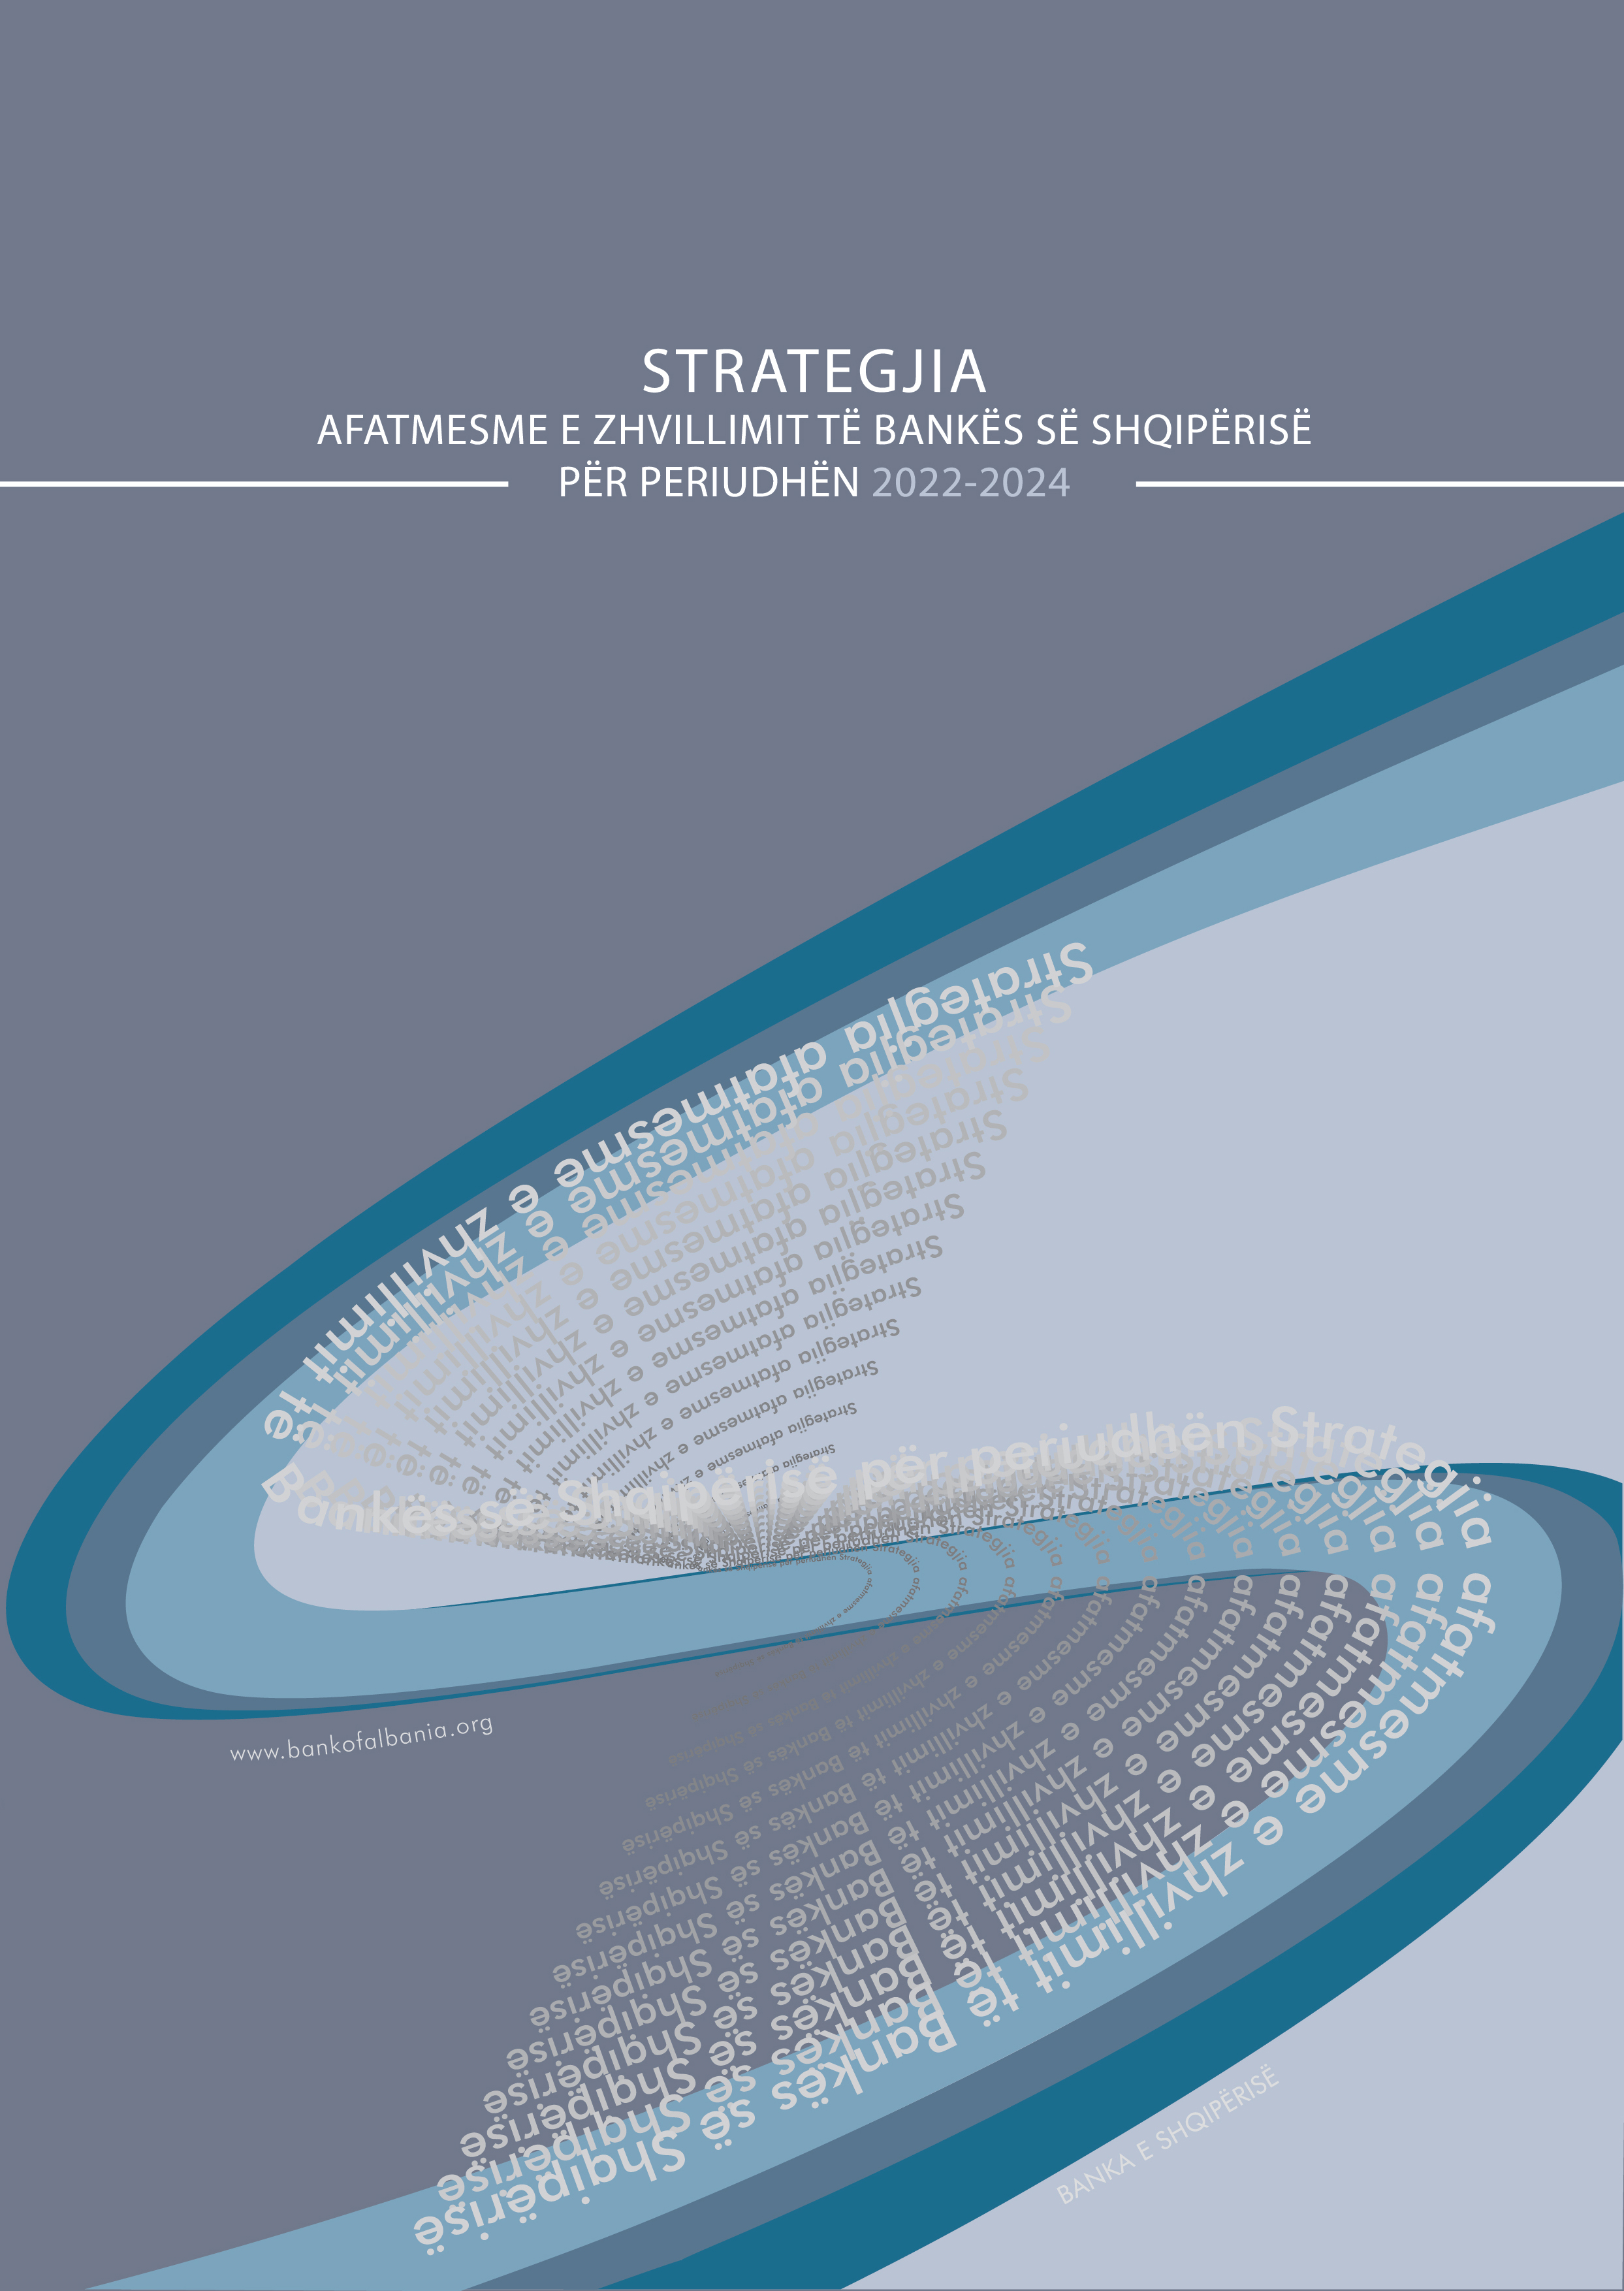 Medium-term development strategy of the Bank of Albania 2022-2024